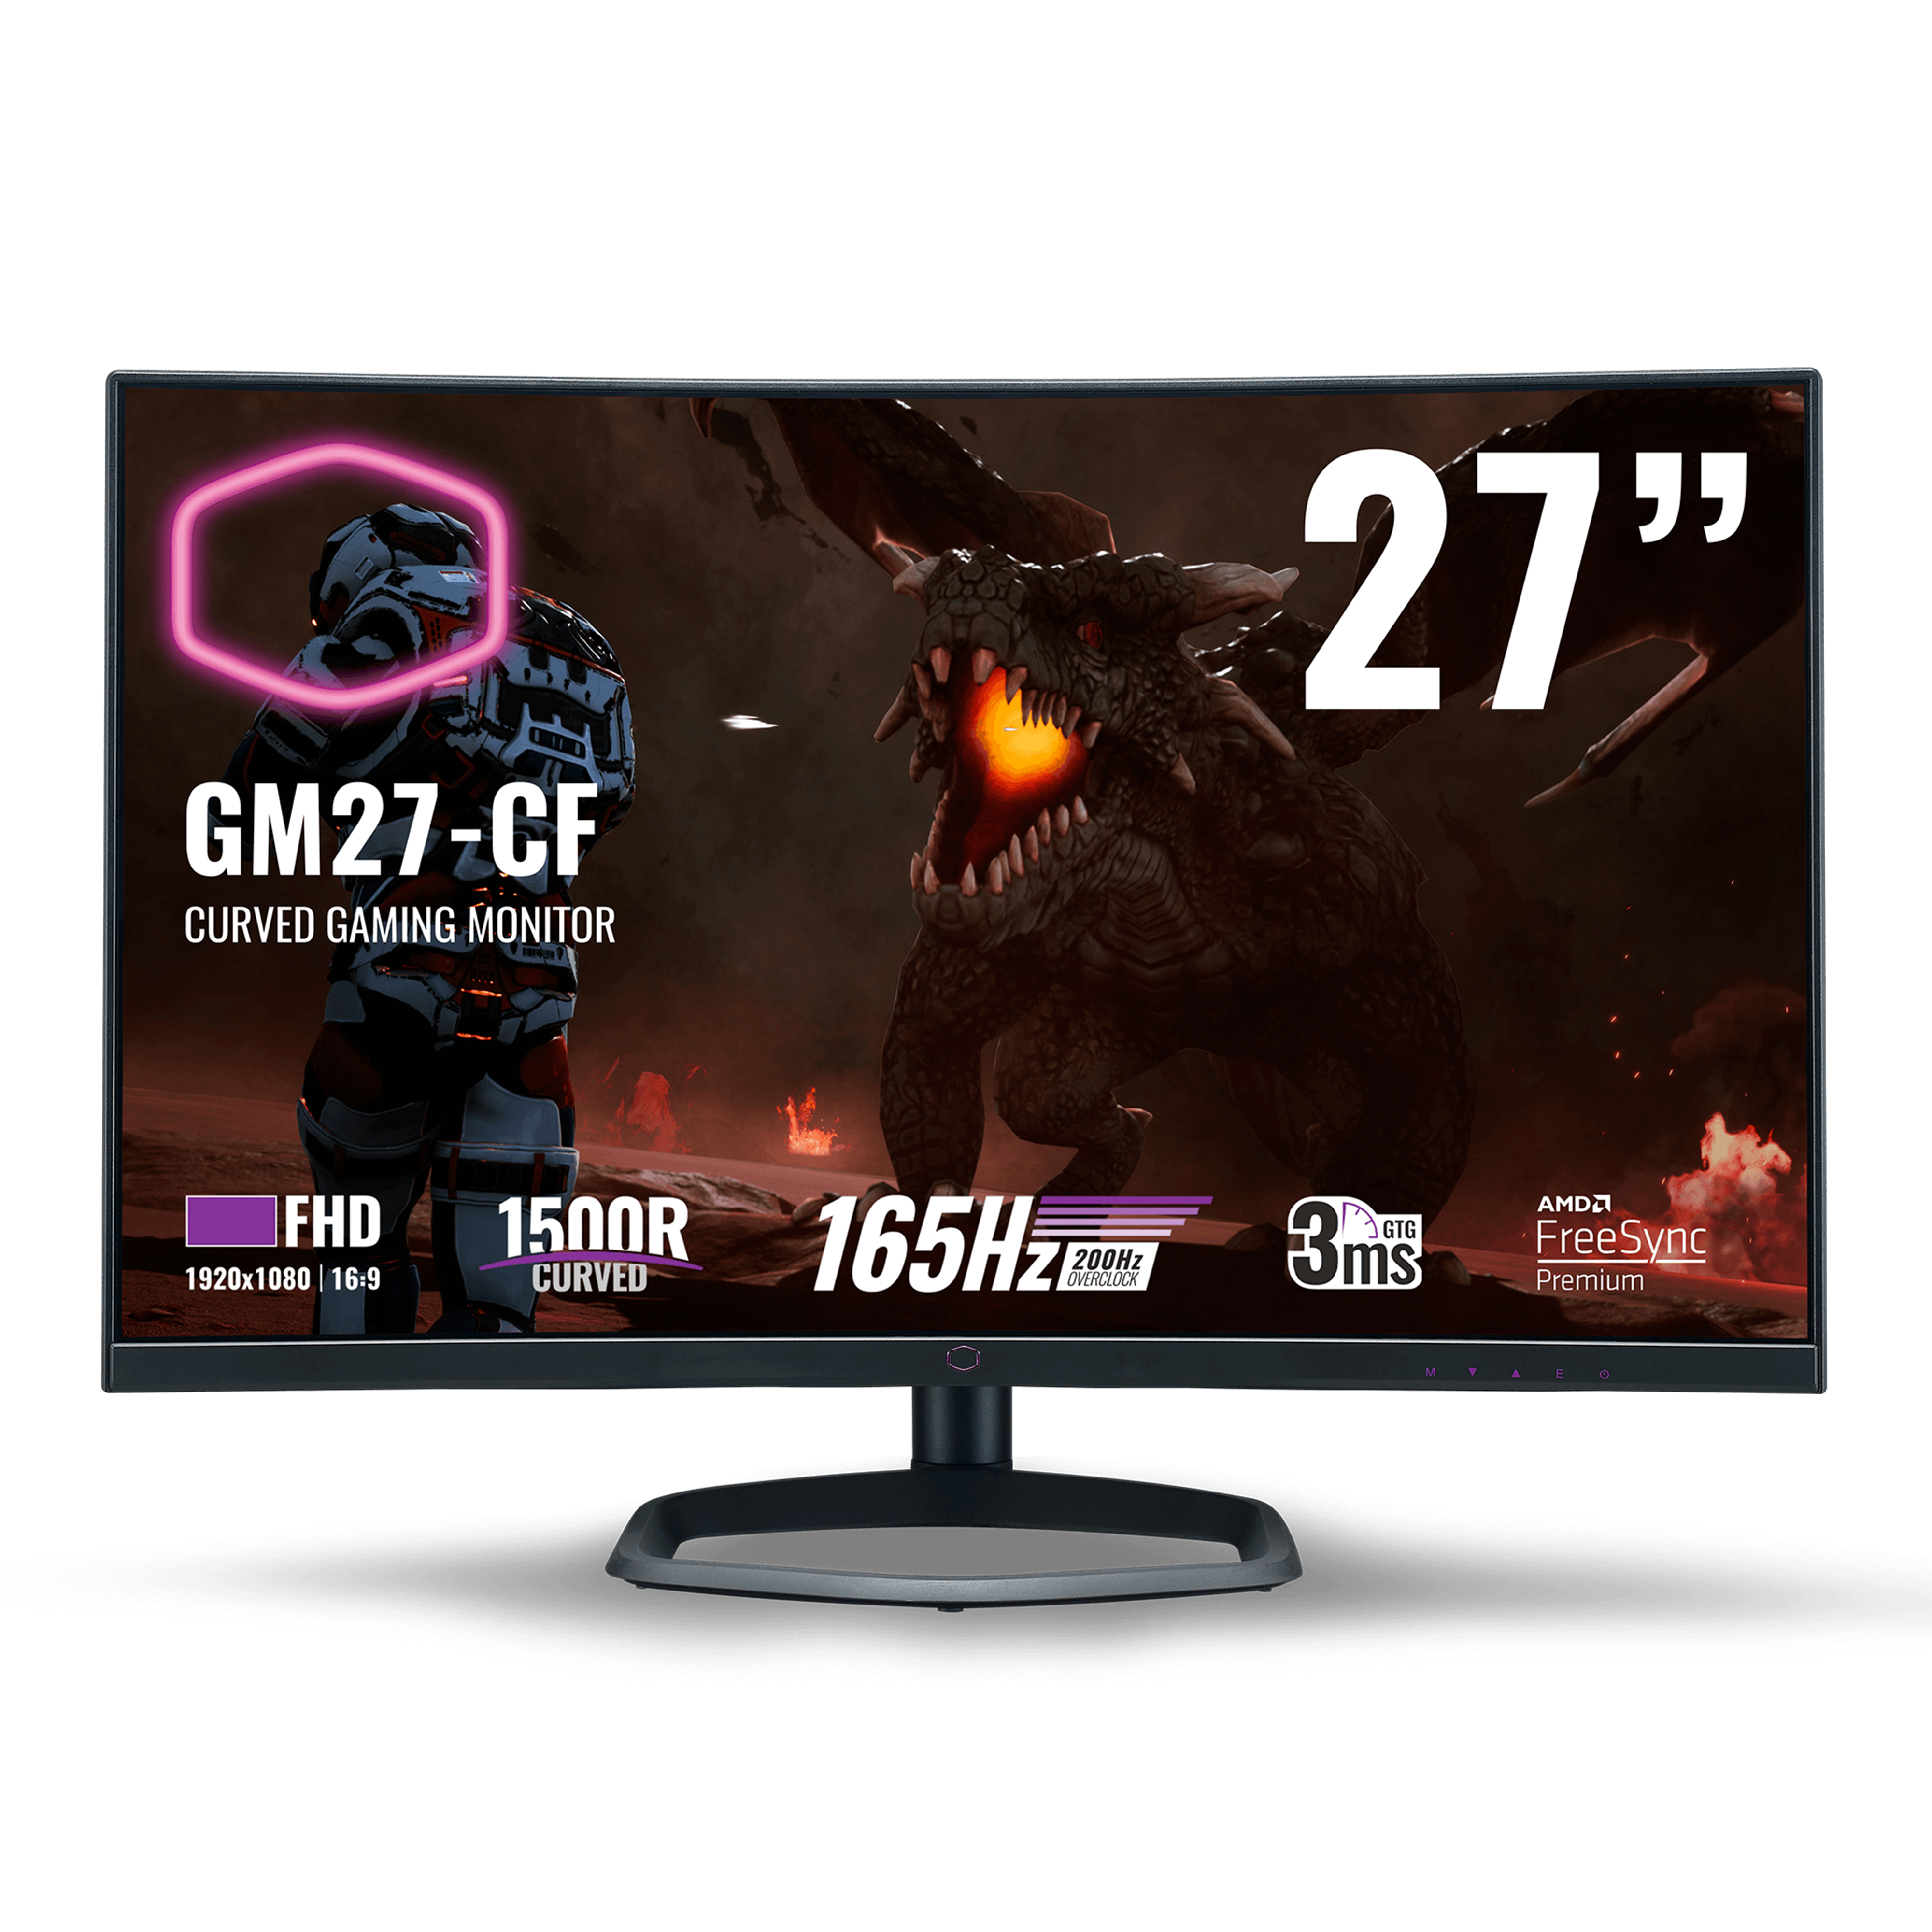 GM27-CF Gaming Monitor | Cooler Master